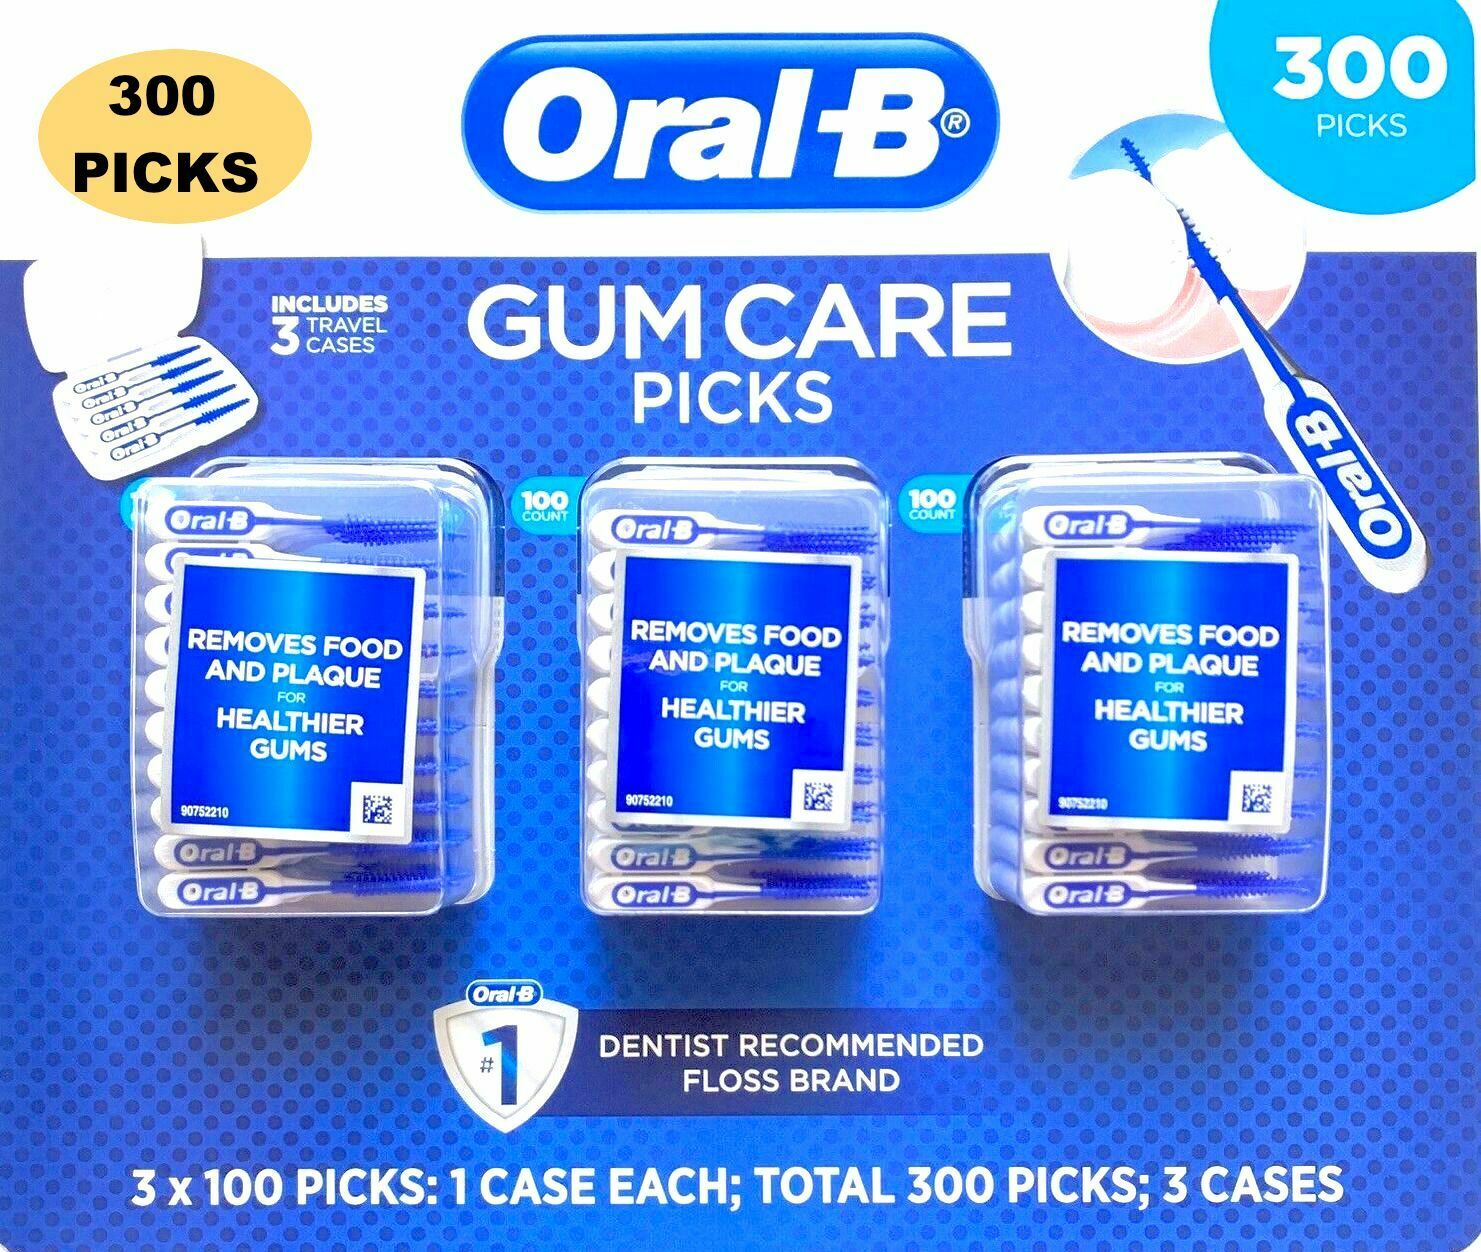 Oral B Gum Care Picks 300 Picks #1 Dentist Recommended Floss, Removes Plaque